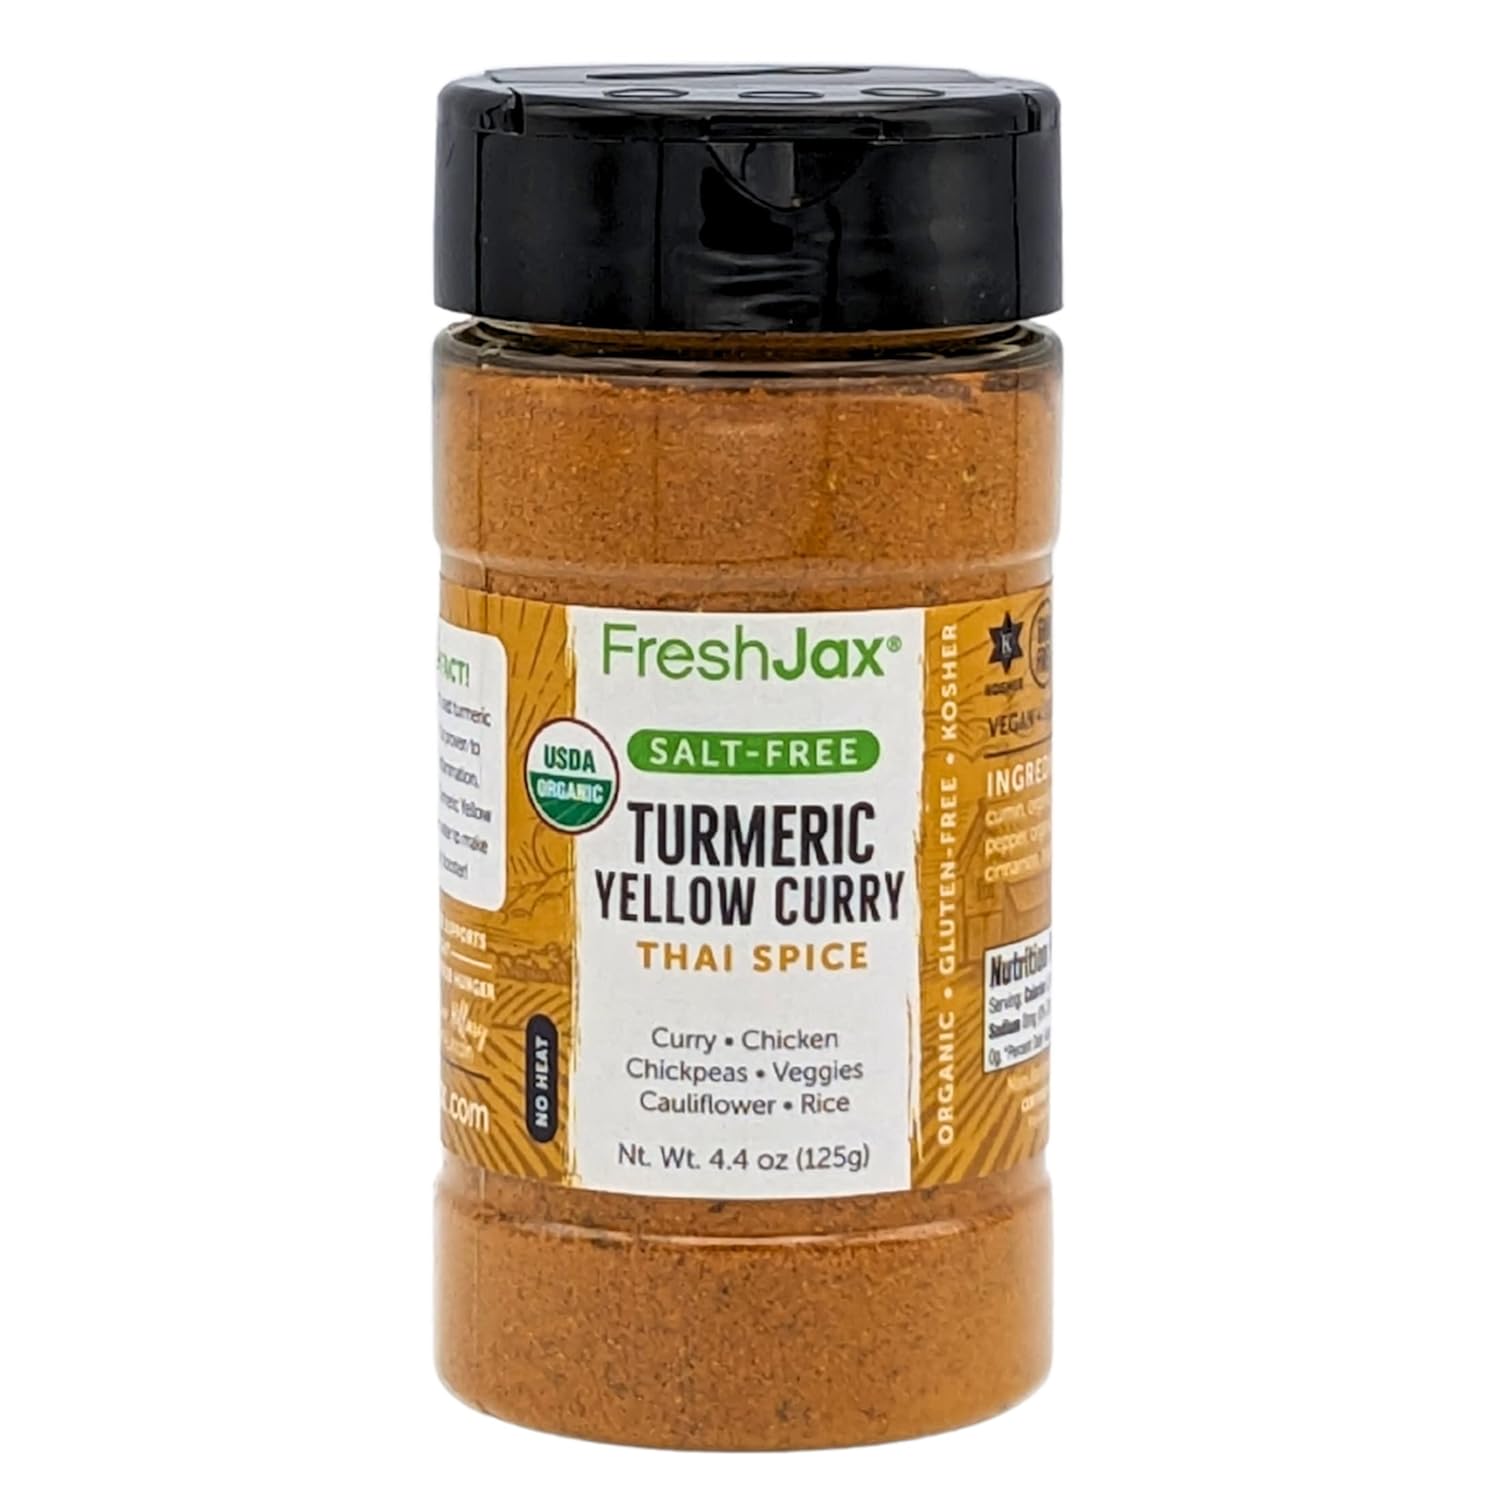 FreshJax Salt-Free Yellow Curry Powder (4.4 oz Bottle) Non GMO, Gluten Free, Keto, Paleo, No Preservatives Curry Powder | Handcrafted in Jacksonville